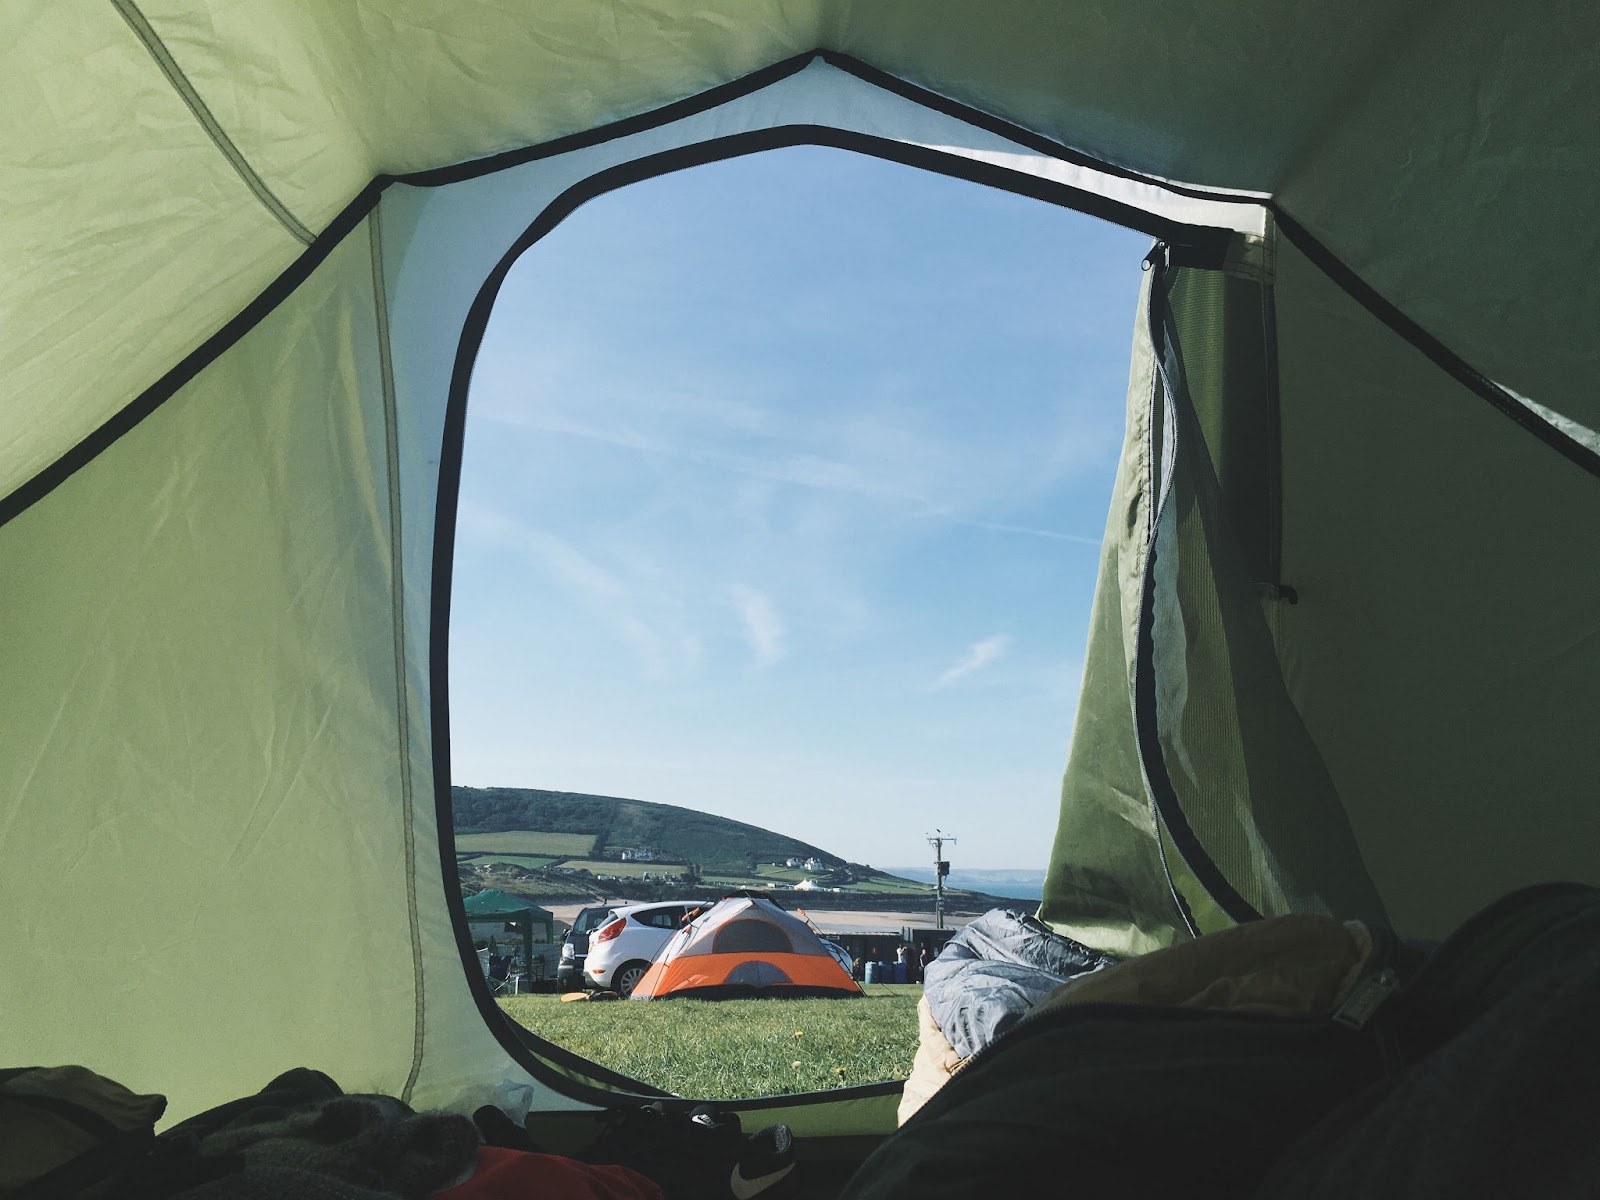 Camping festival